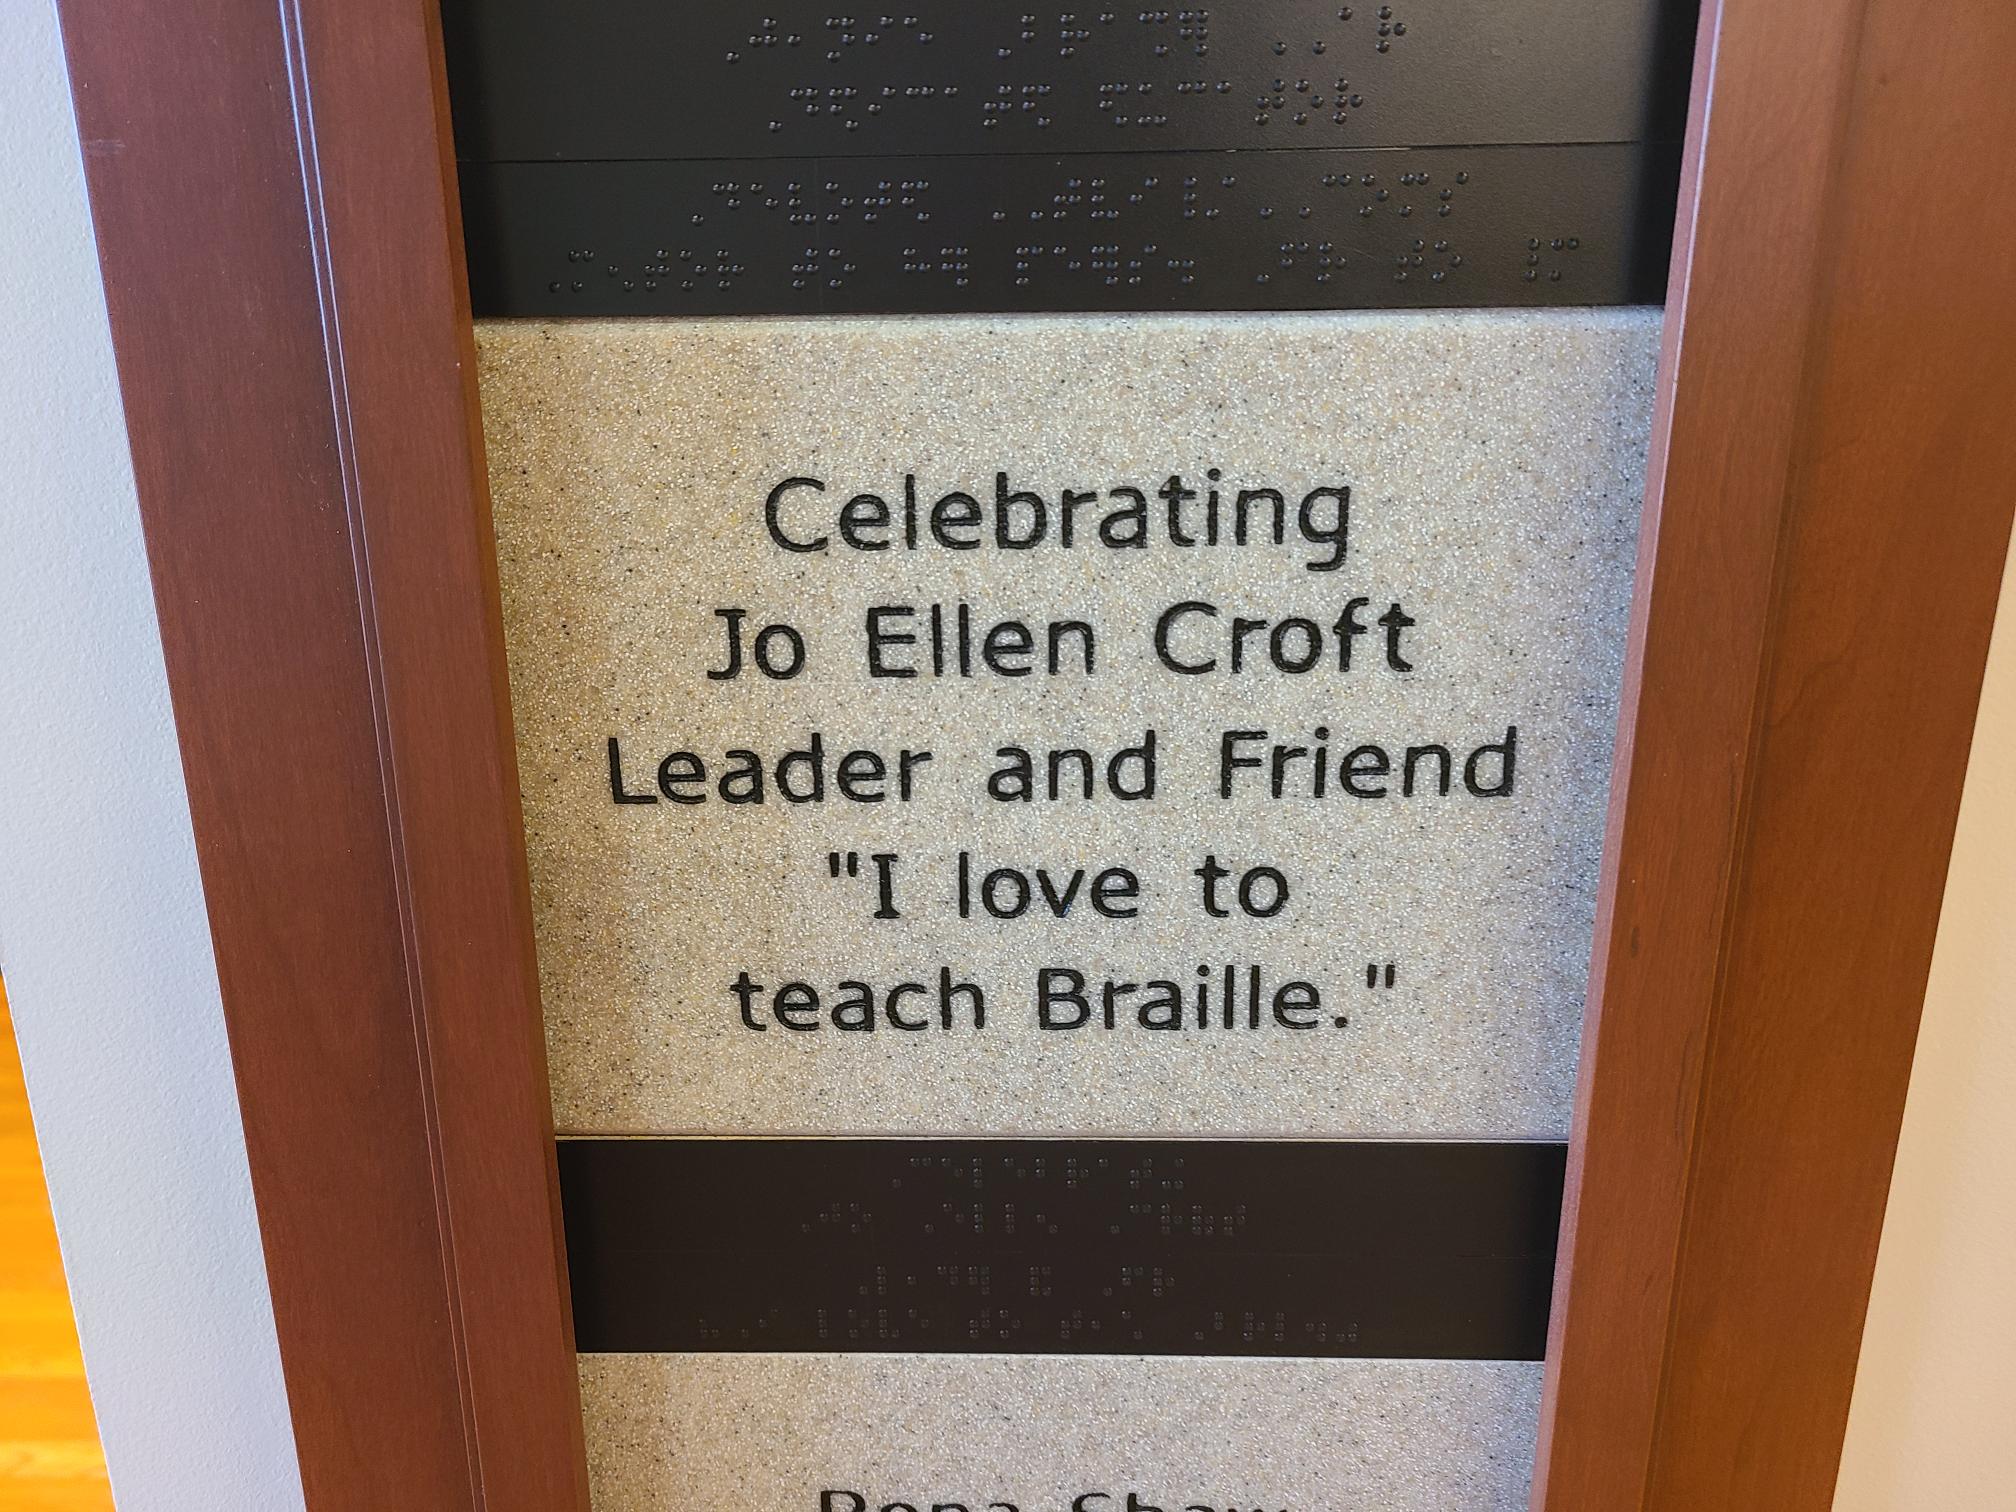 Celebrating Jo Ellen Croft, Leader and Friend, I Love to teach Braille.